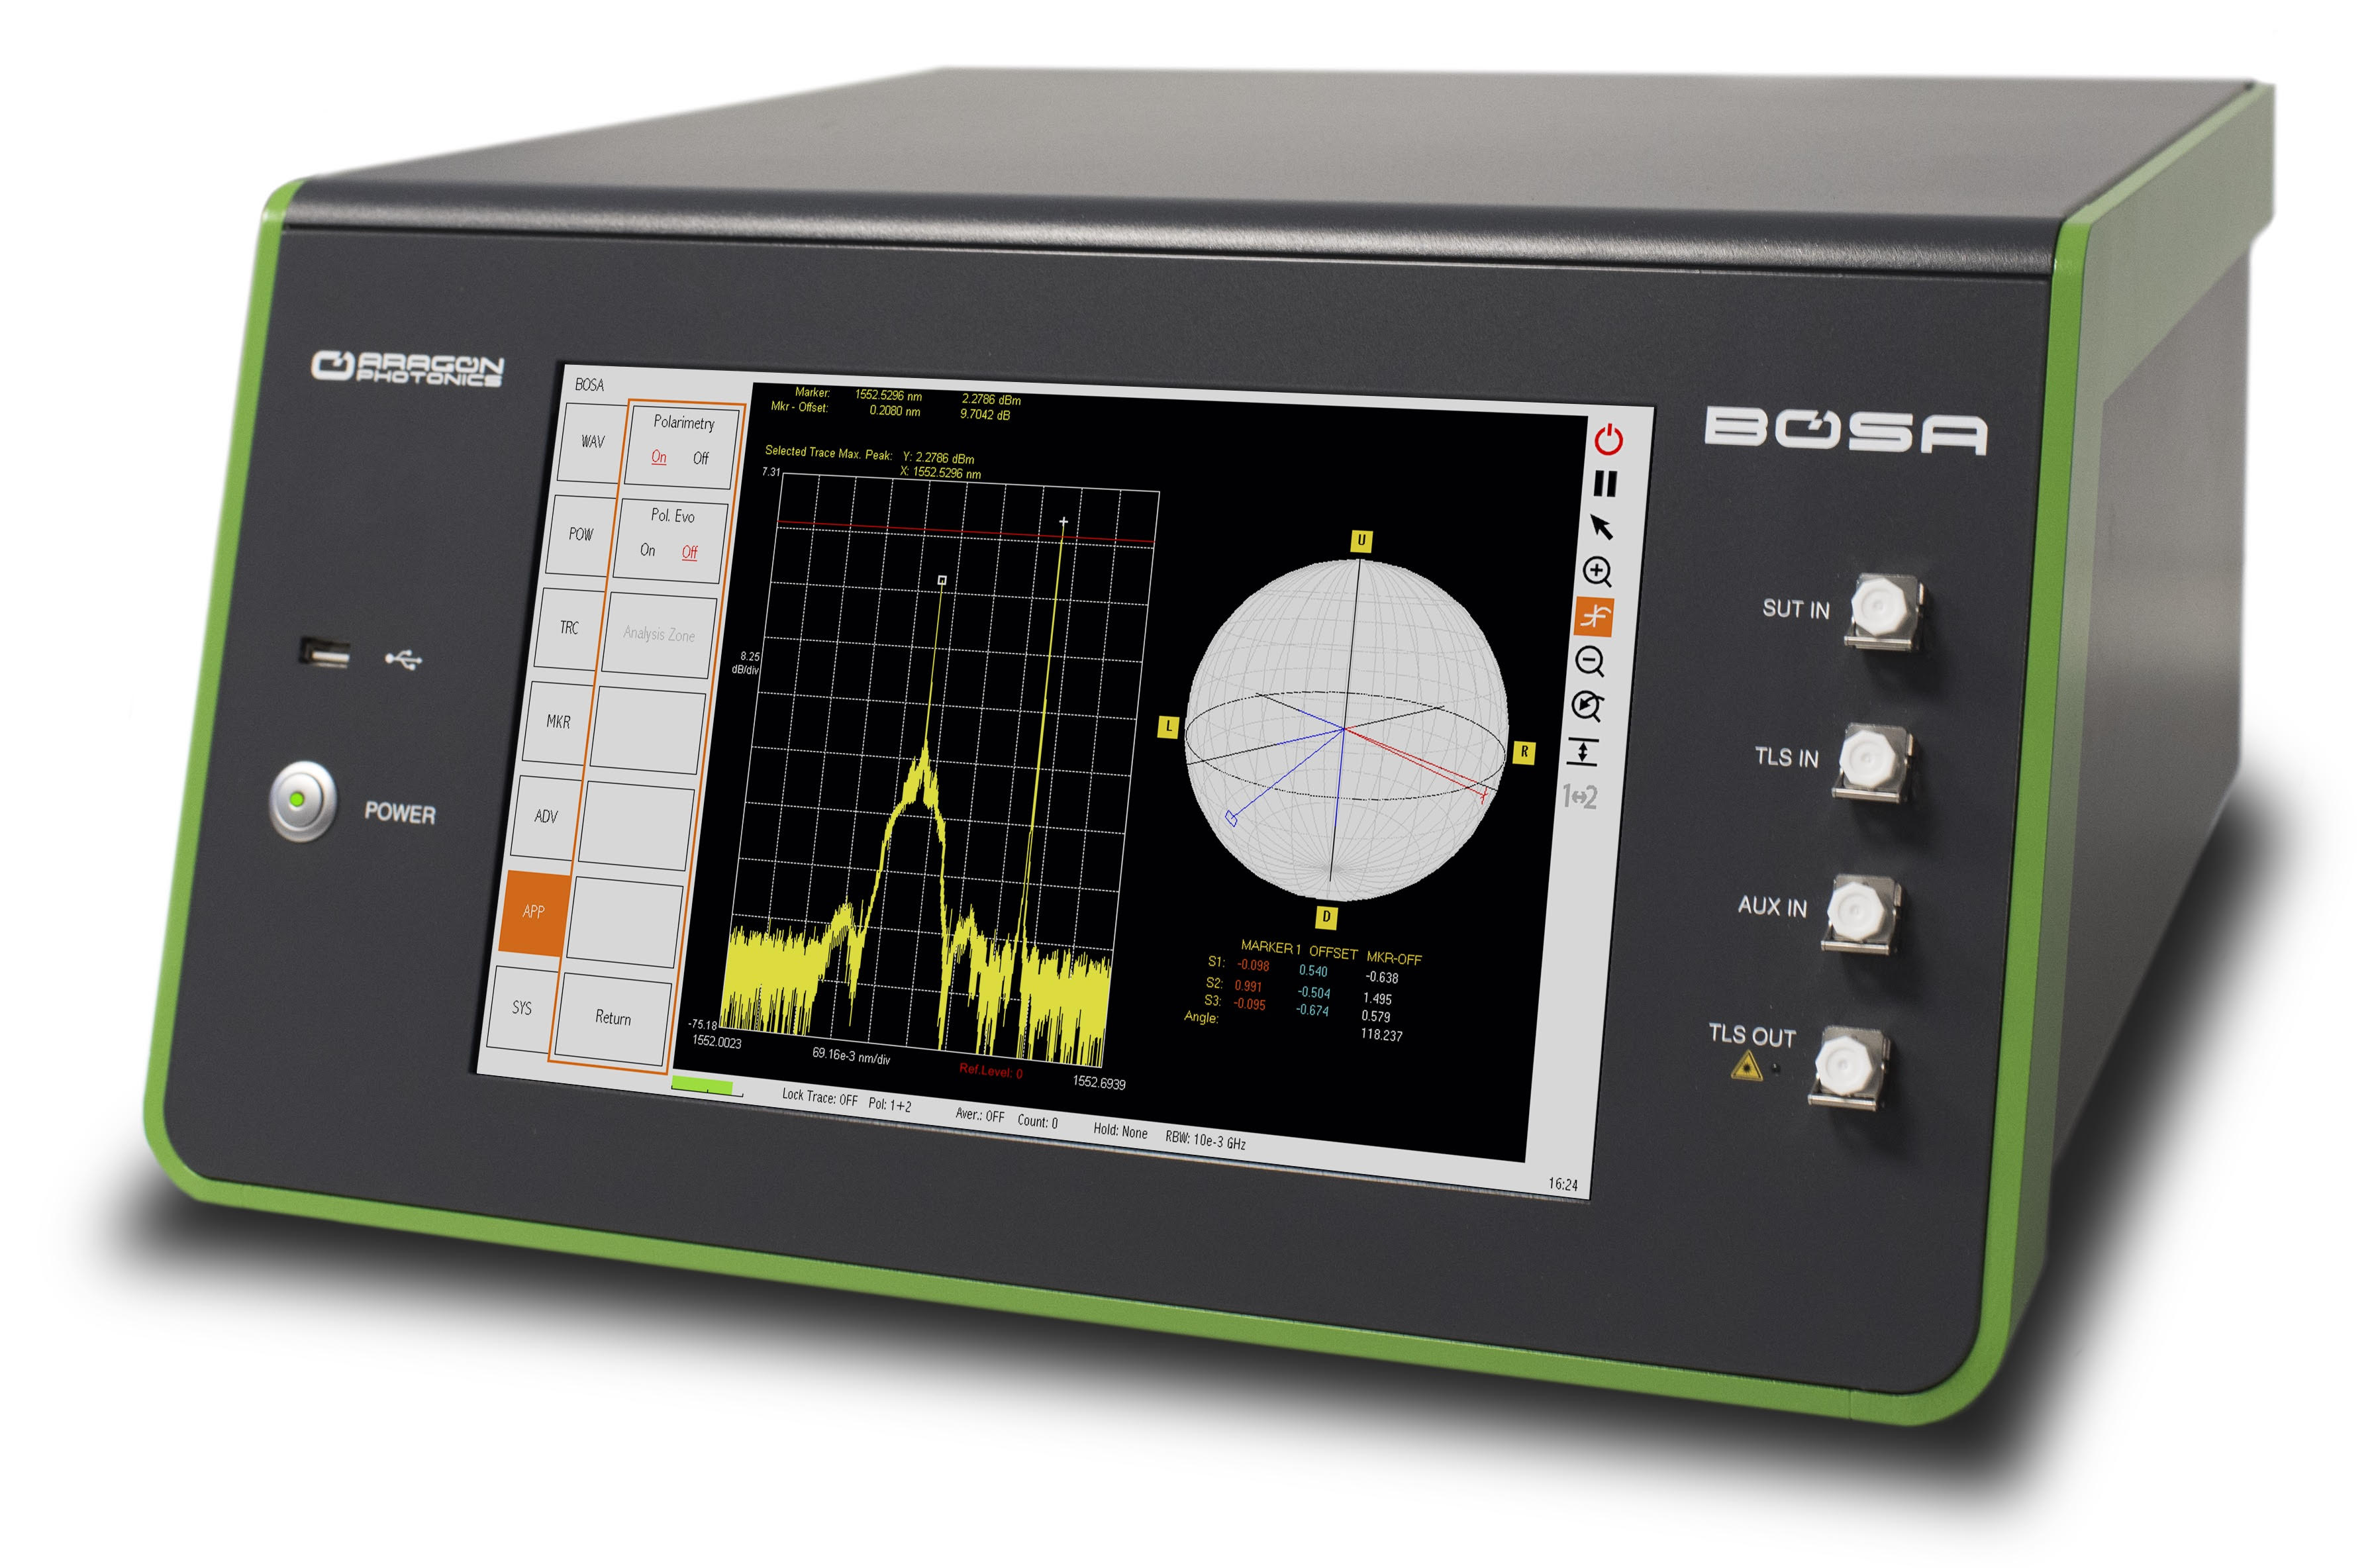 BOSA400-optical-spectrum-analyzer